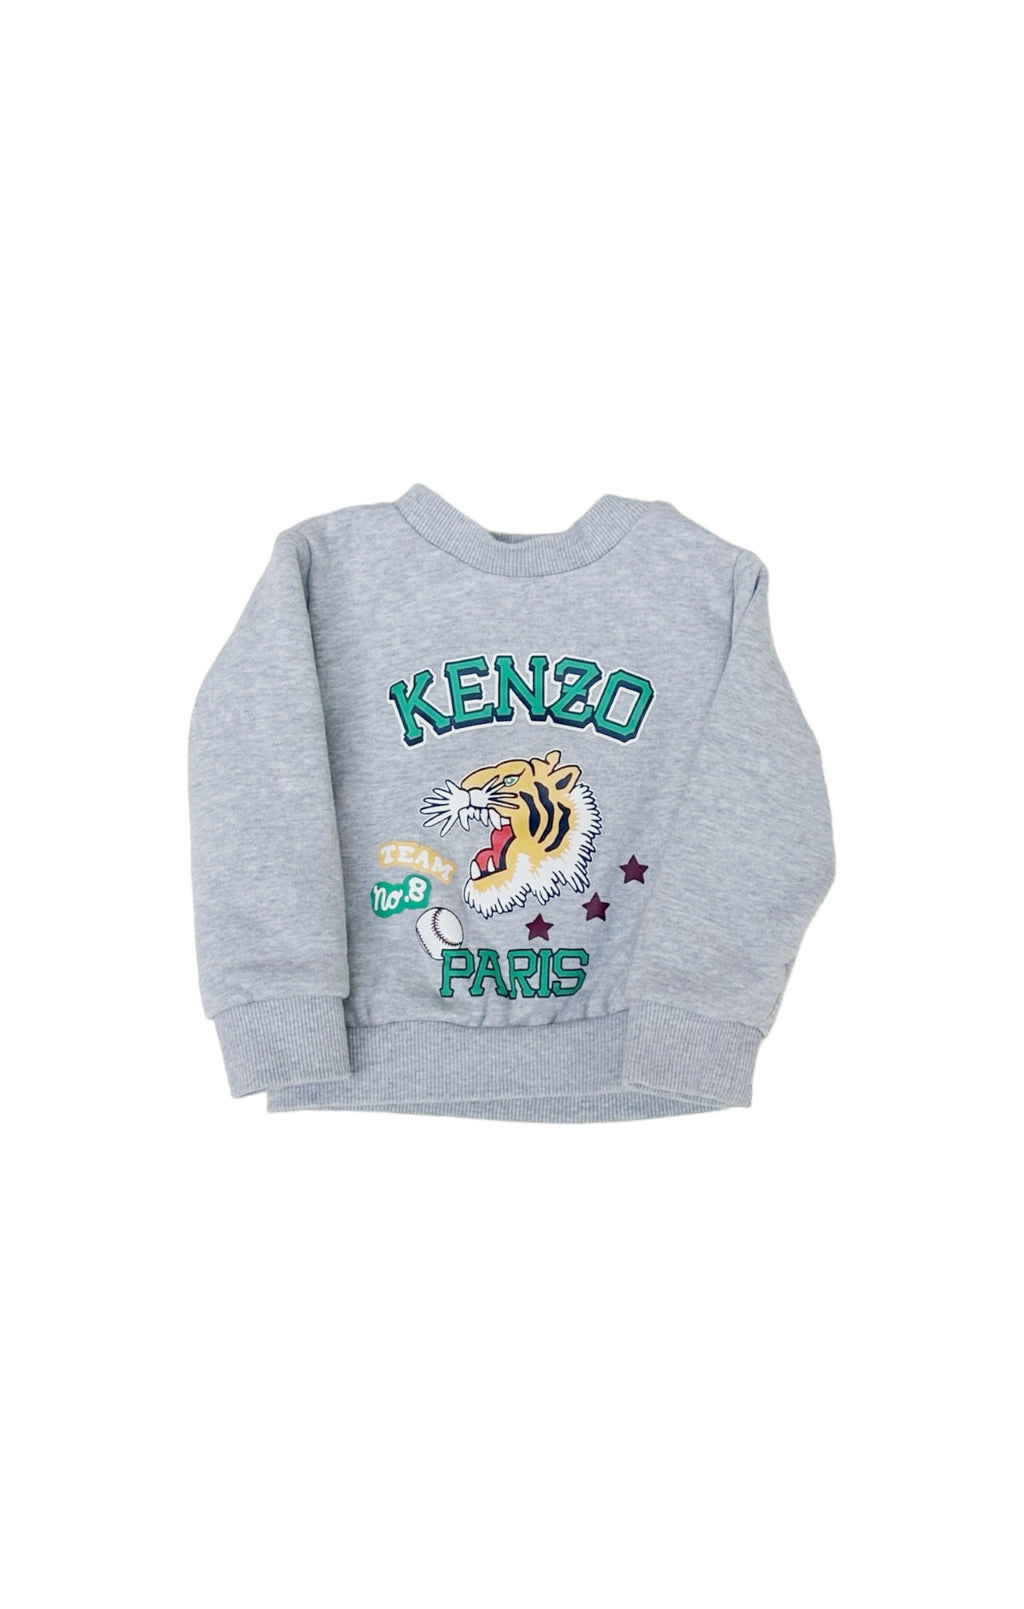 KENZO Sweatshirt Size: 86 / Fits like 18 Months